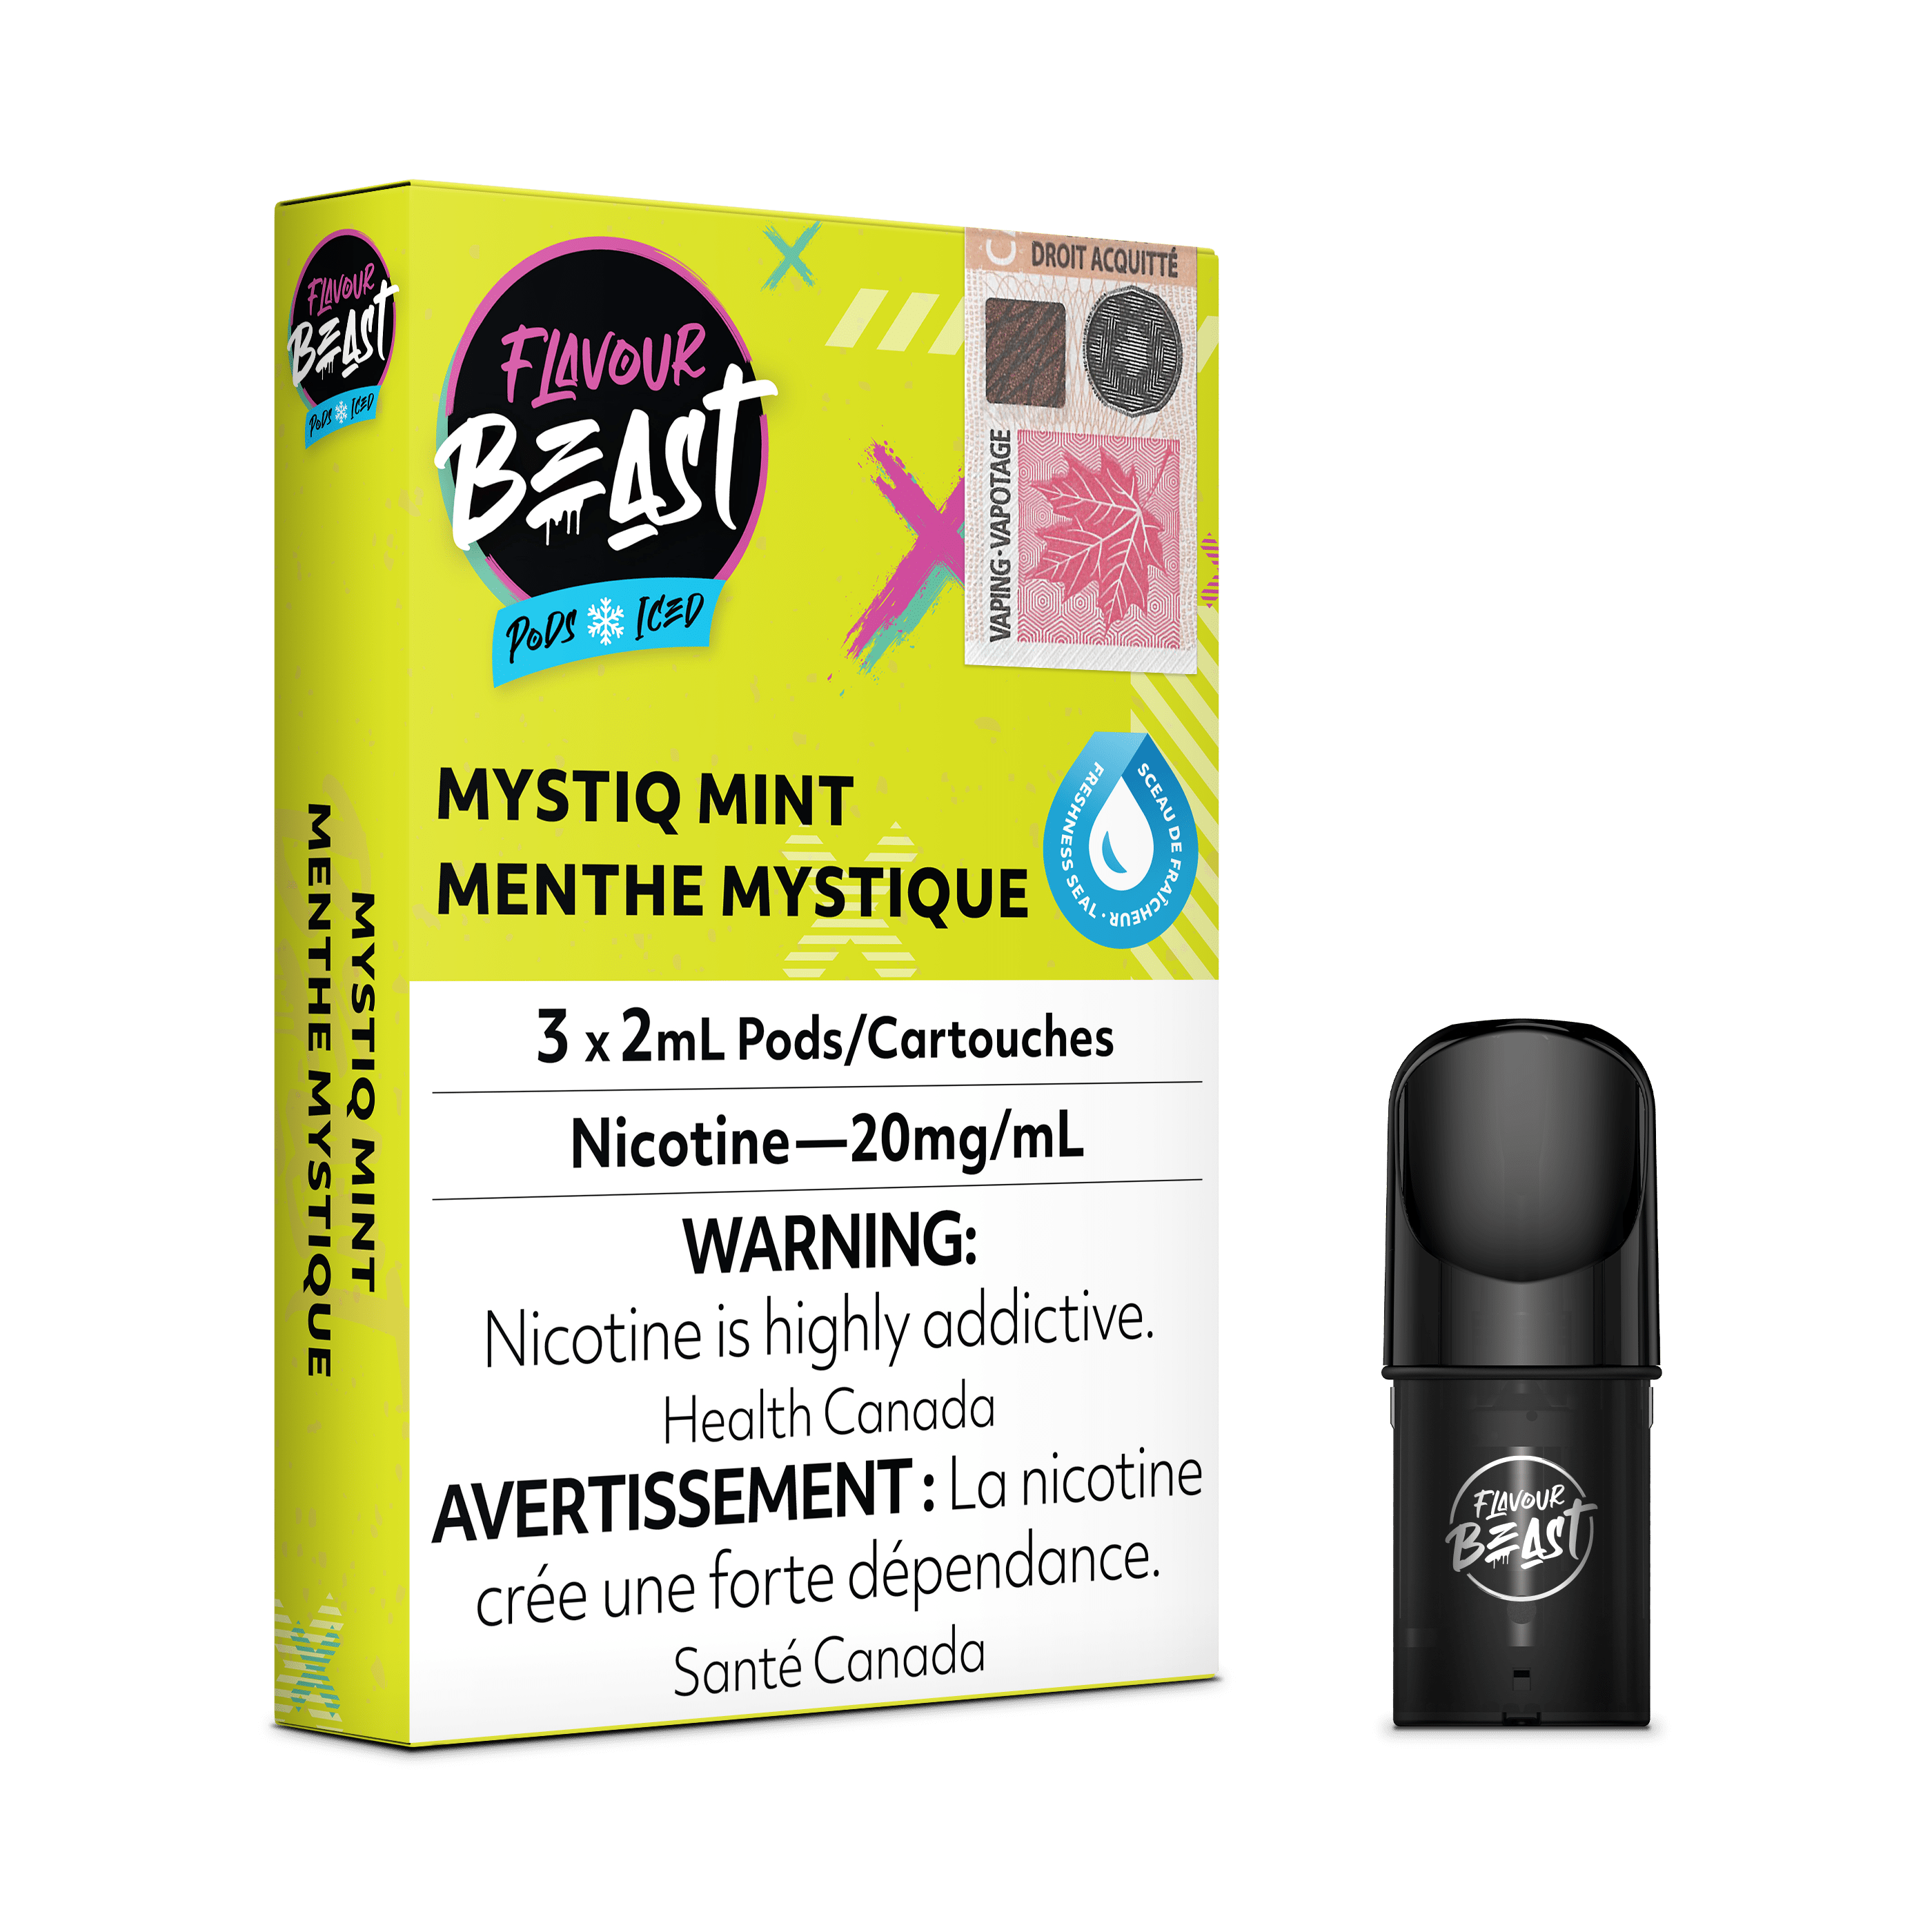 Flavour Beast - Mystiq Mint Iced Vape Pod available on Canada online vape shop